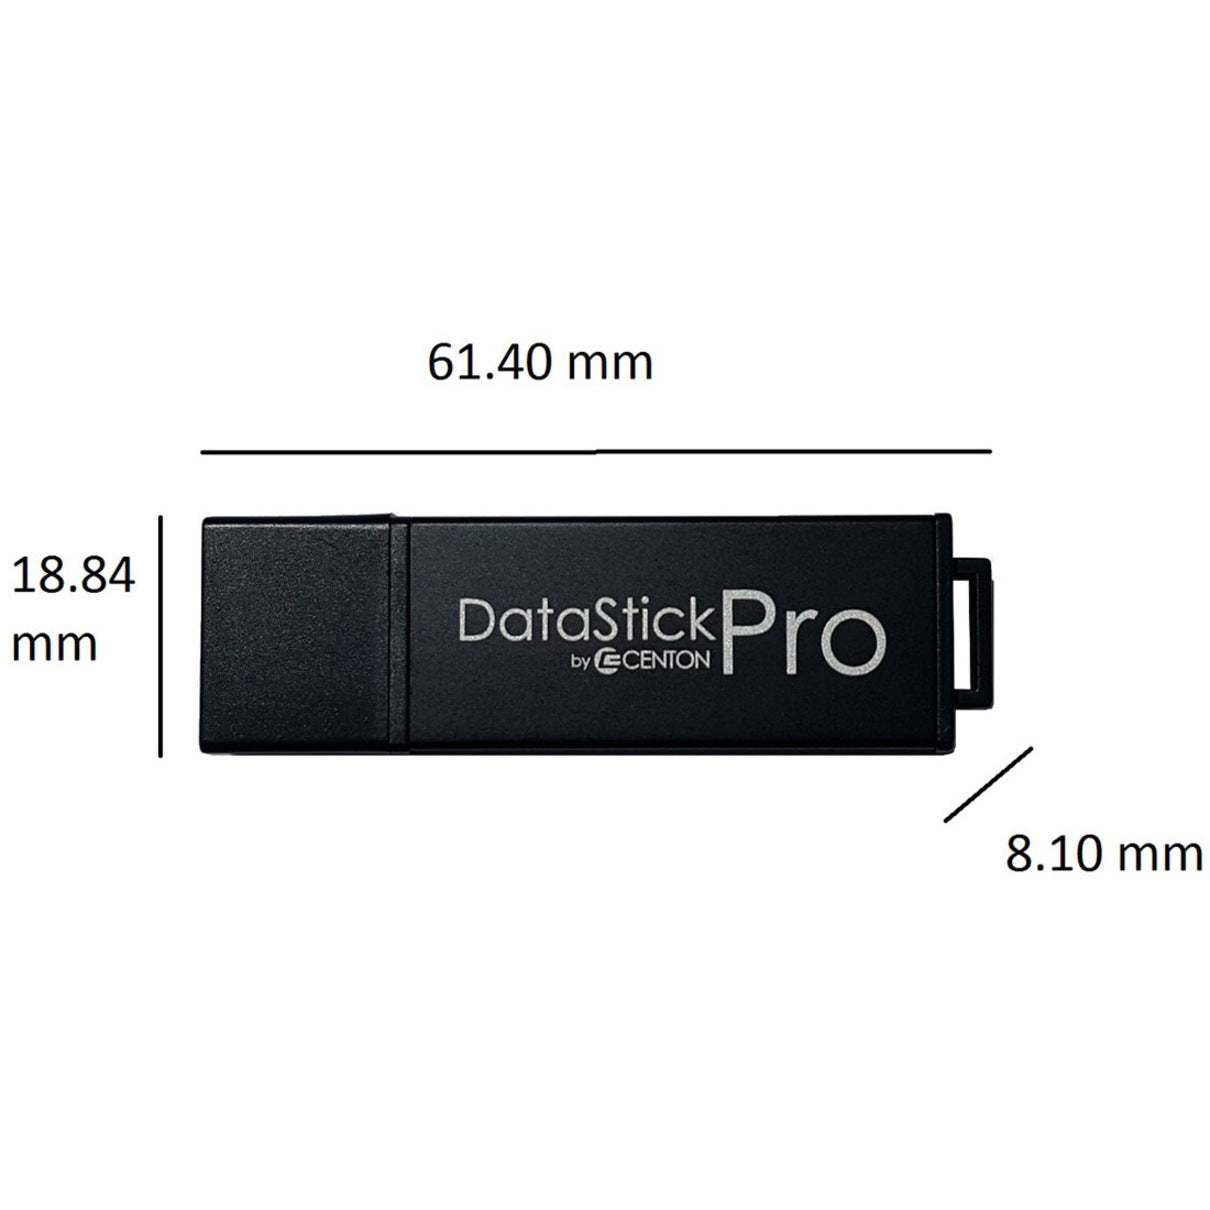 Centon DSP16GB10PK DataStick Pro USB 2.0 Flash Drive - 10 Pack, 16GB Storage Capacity